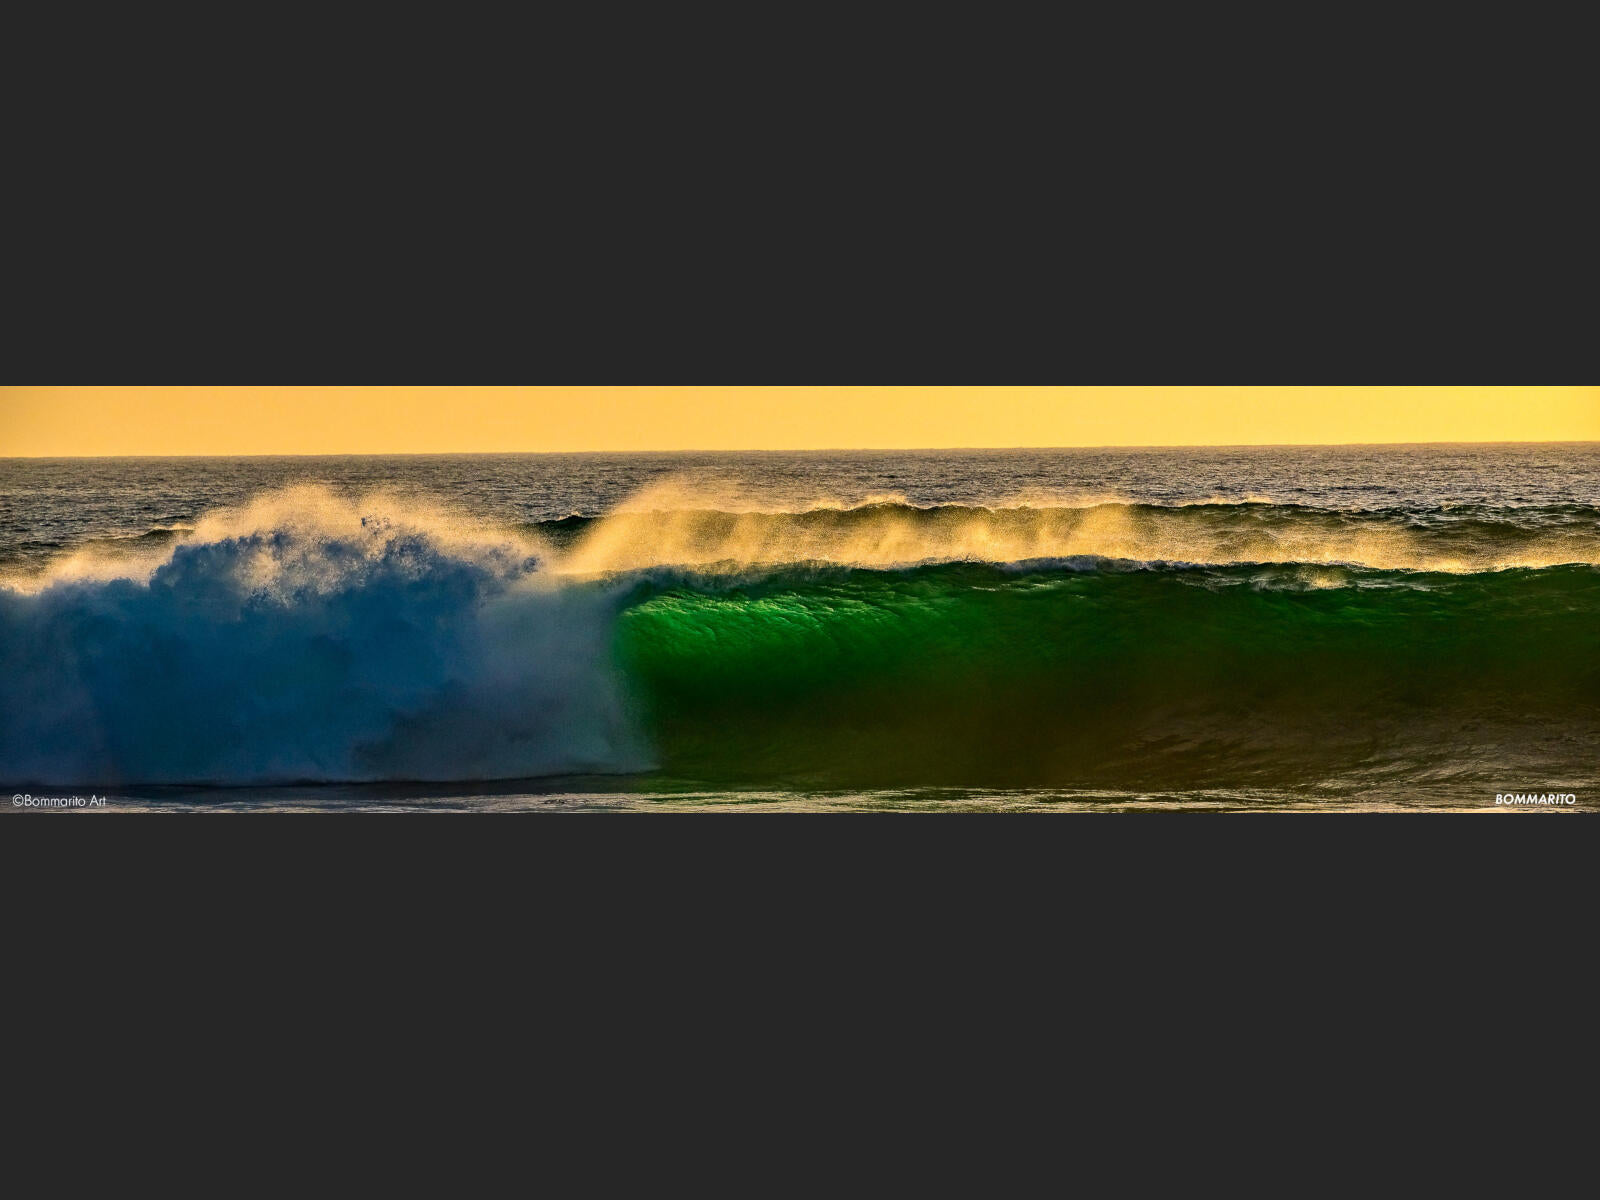 Emerald Surf